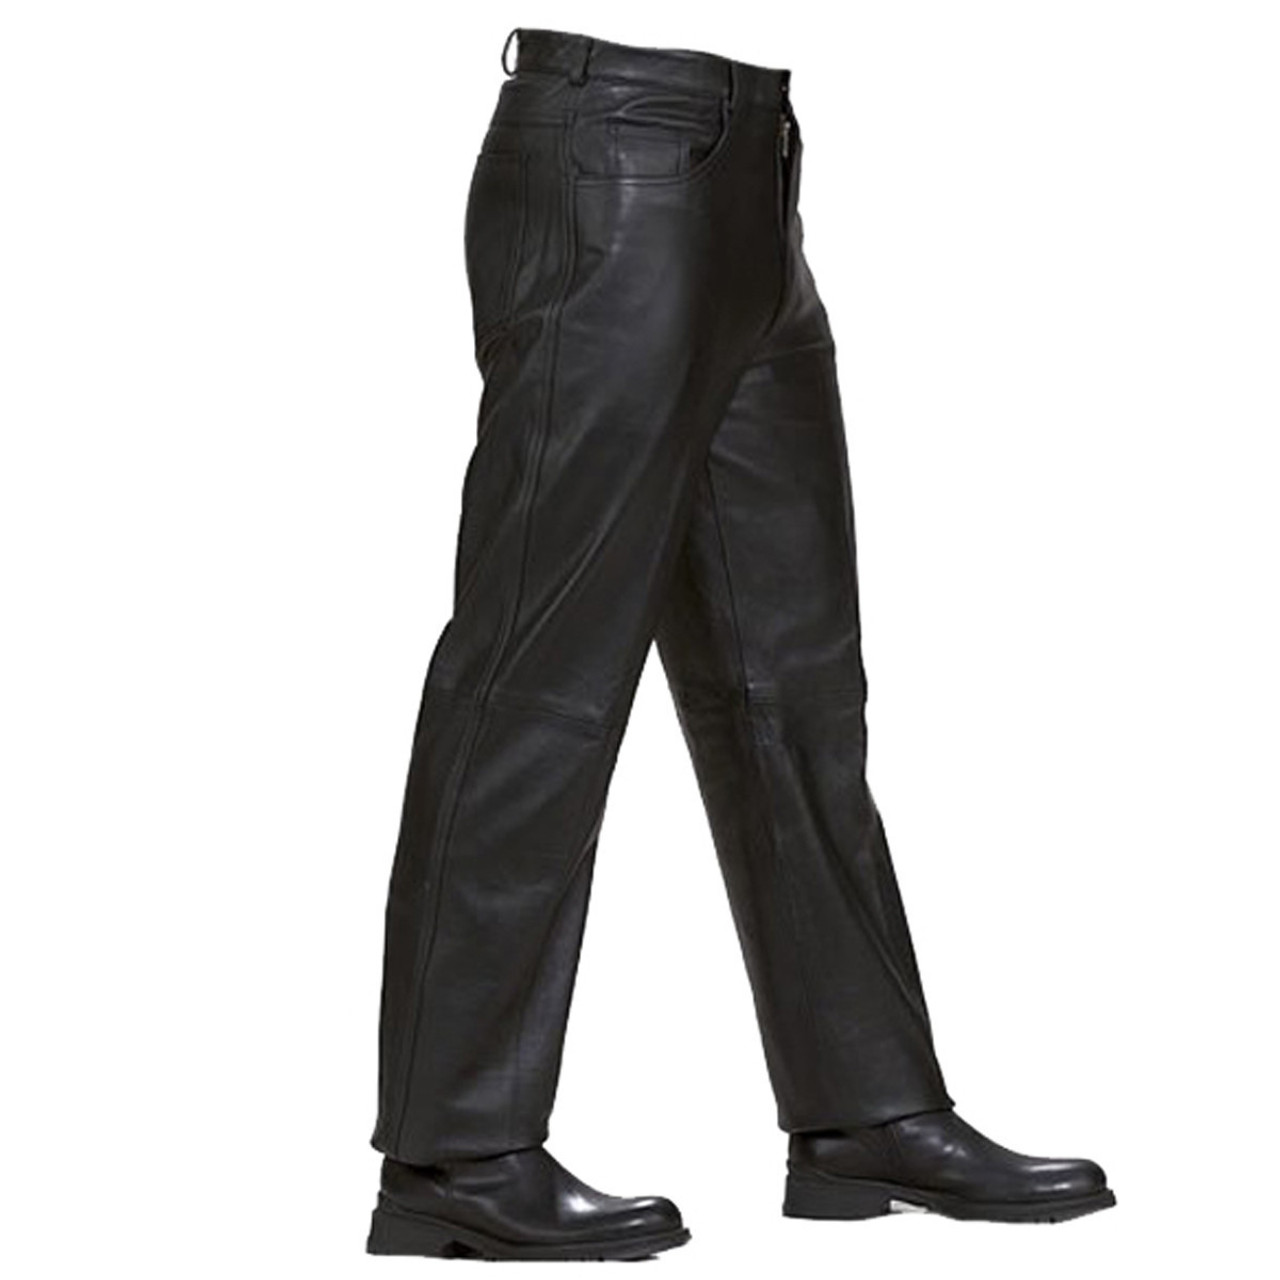 Men's Genuine Cowhide Leather Pants back zipper pockets Jeans Kink Style